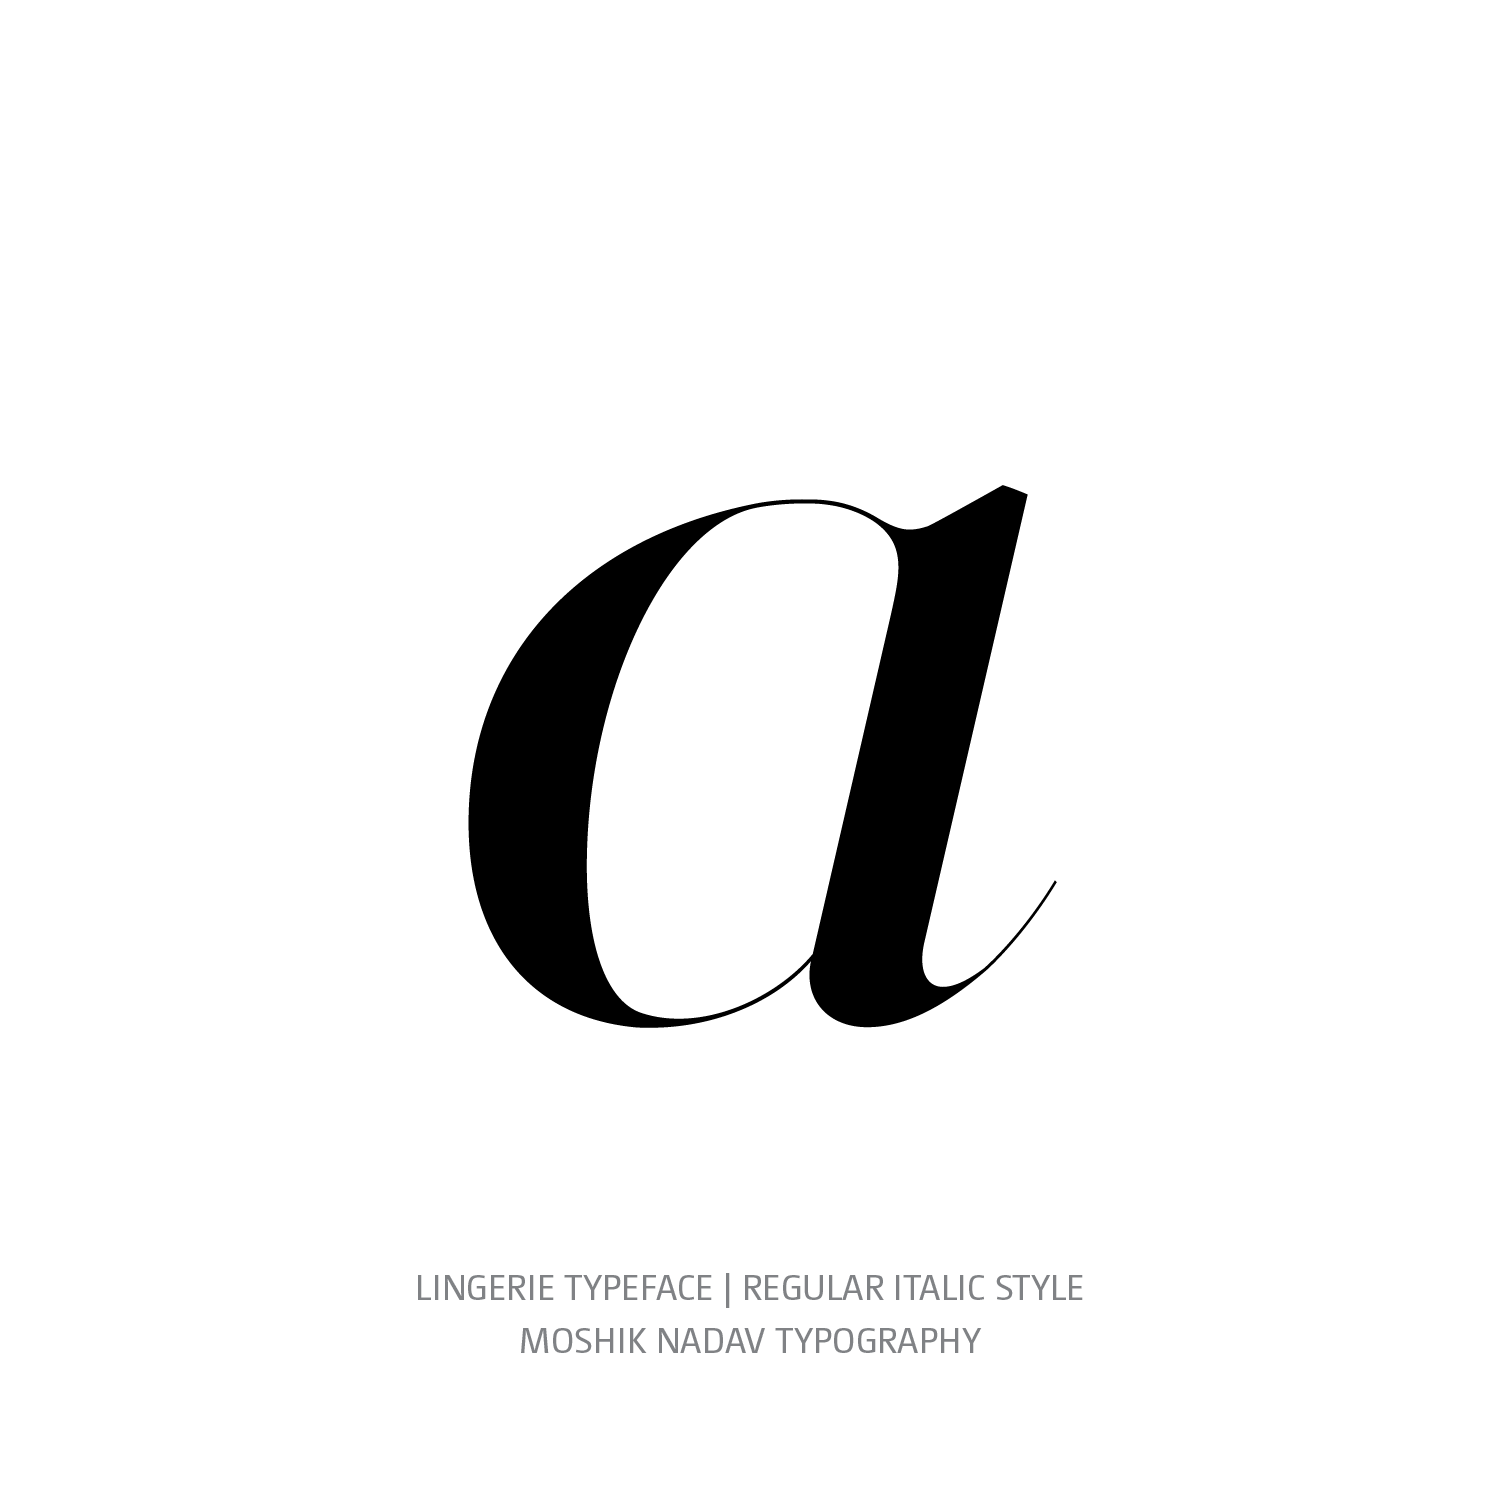 Lingerie Typeface Regular Italic a - Fashion fonts by Moshik Nadav Typography